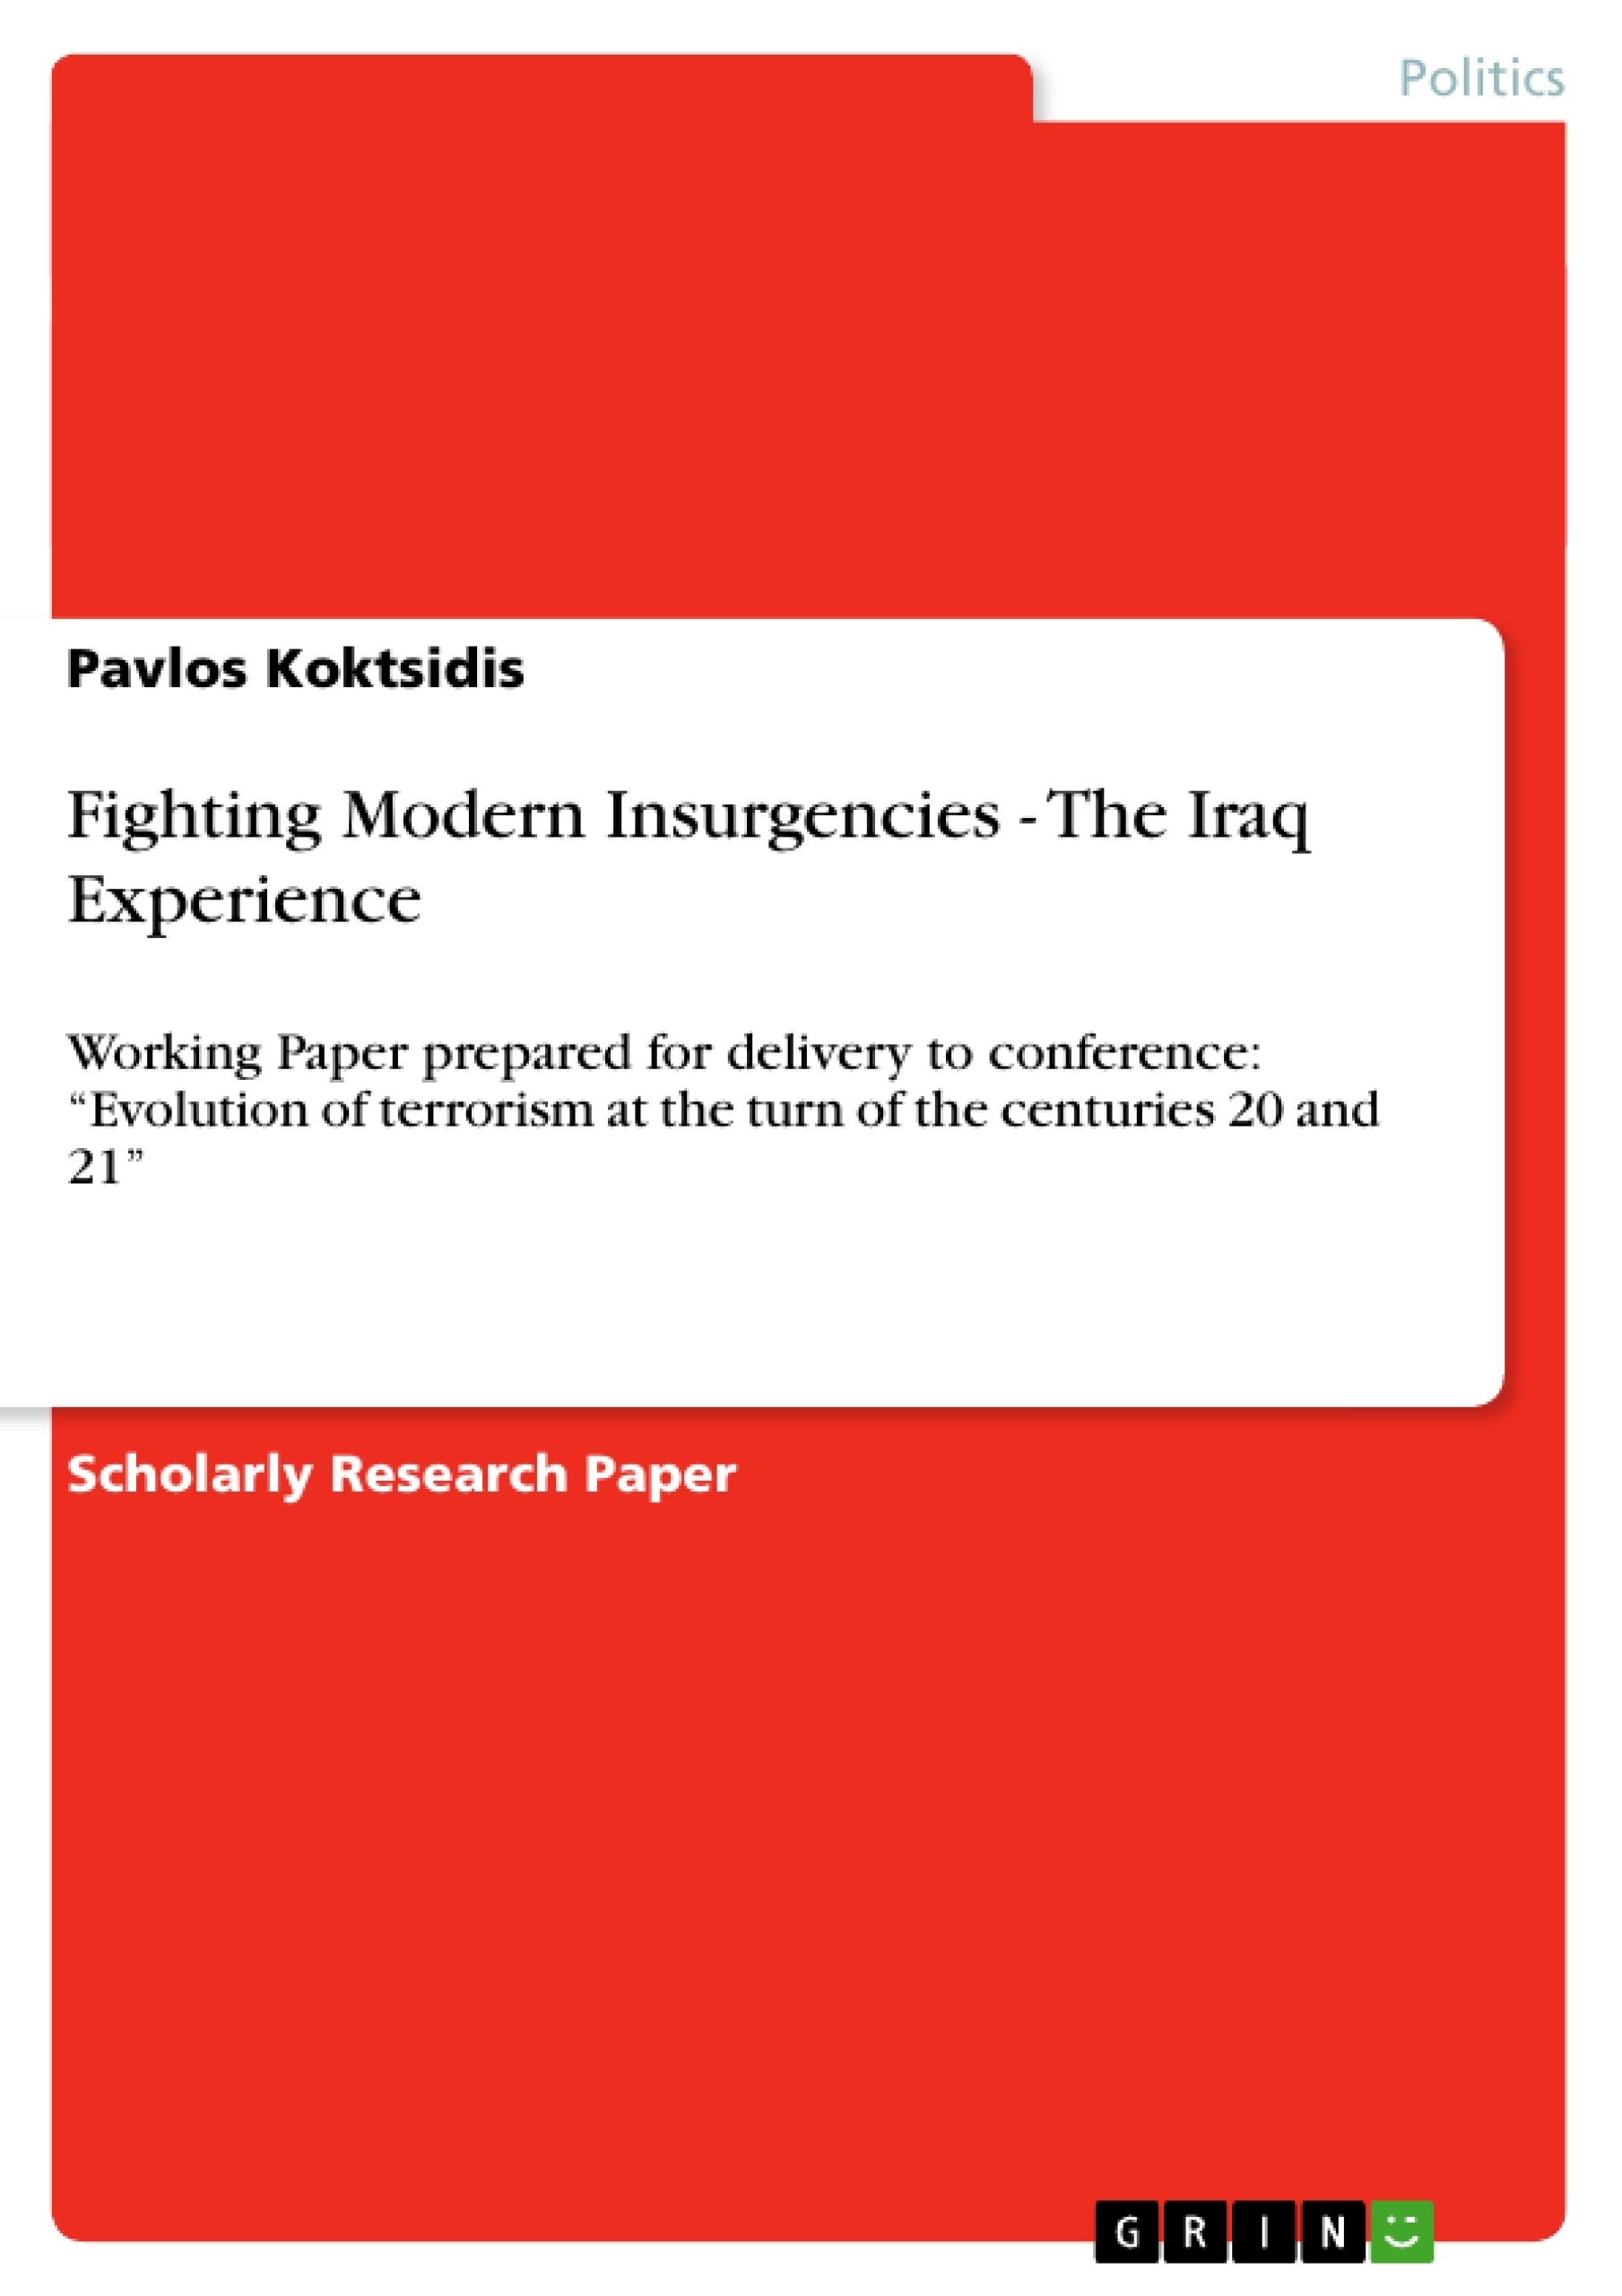 Title: Fighting Modern Insurgencies - The Iraq Experience